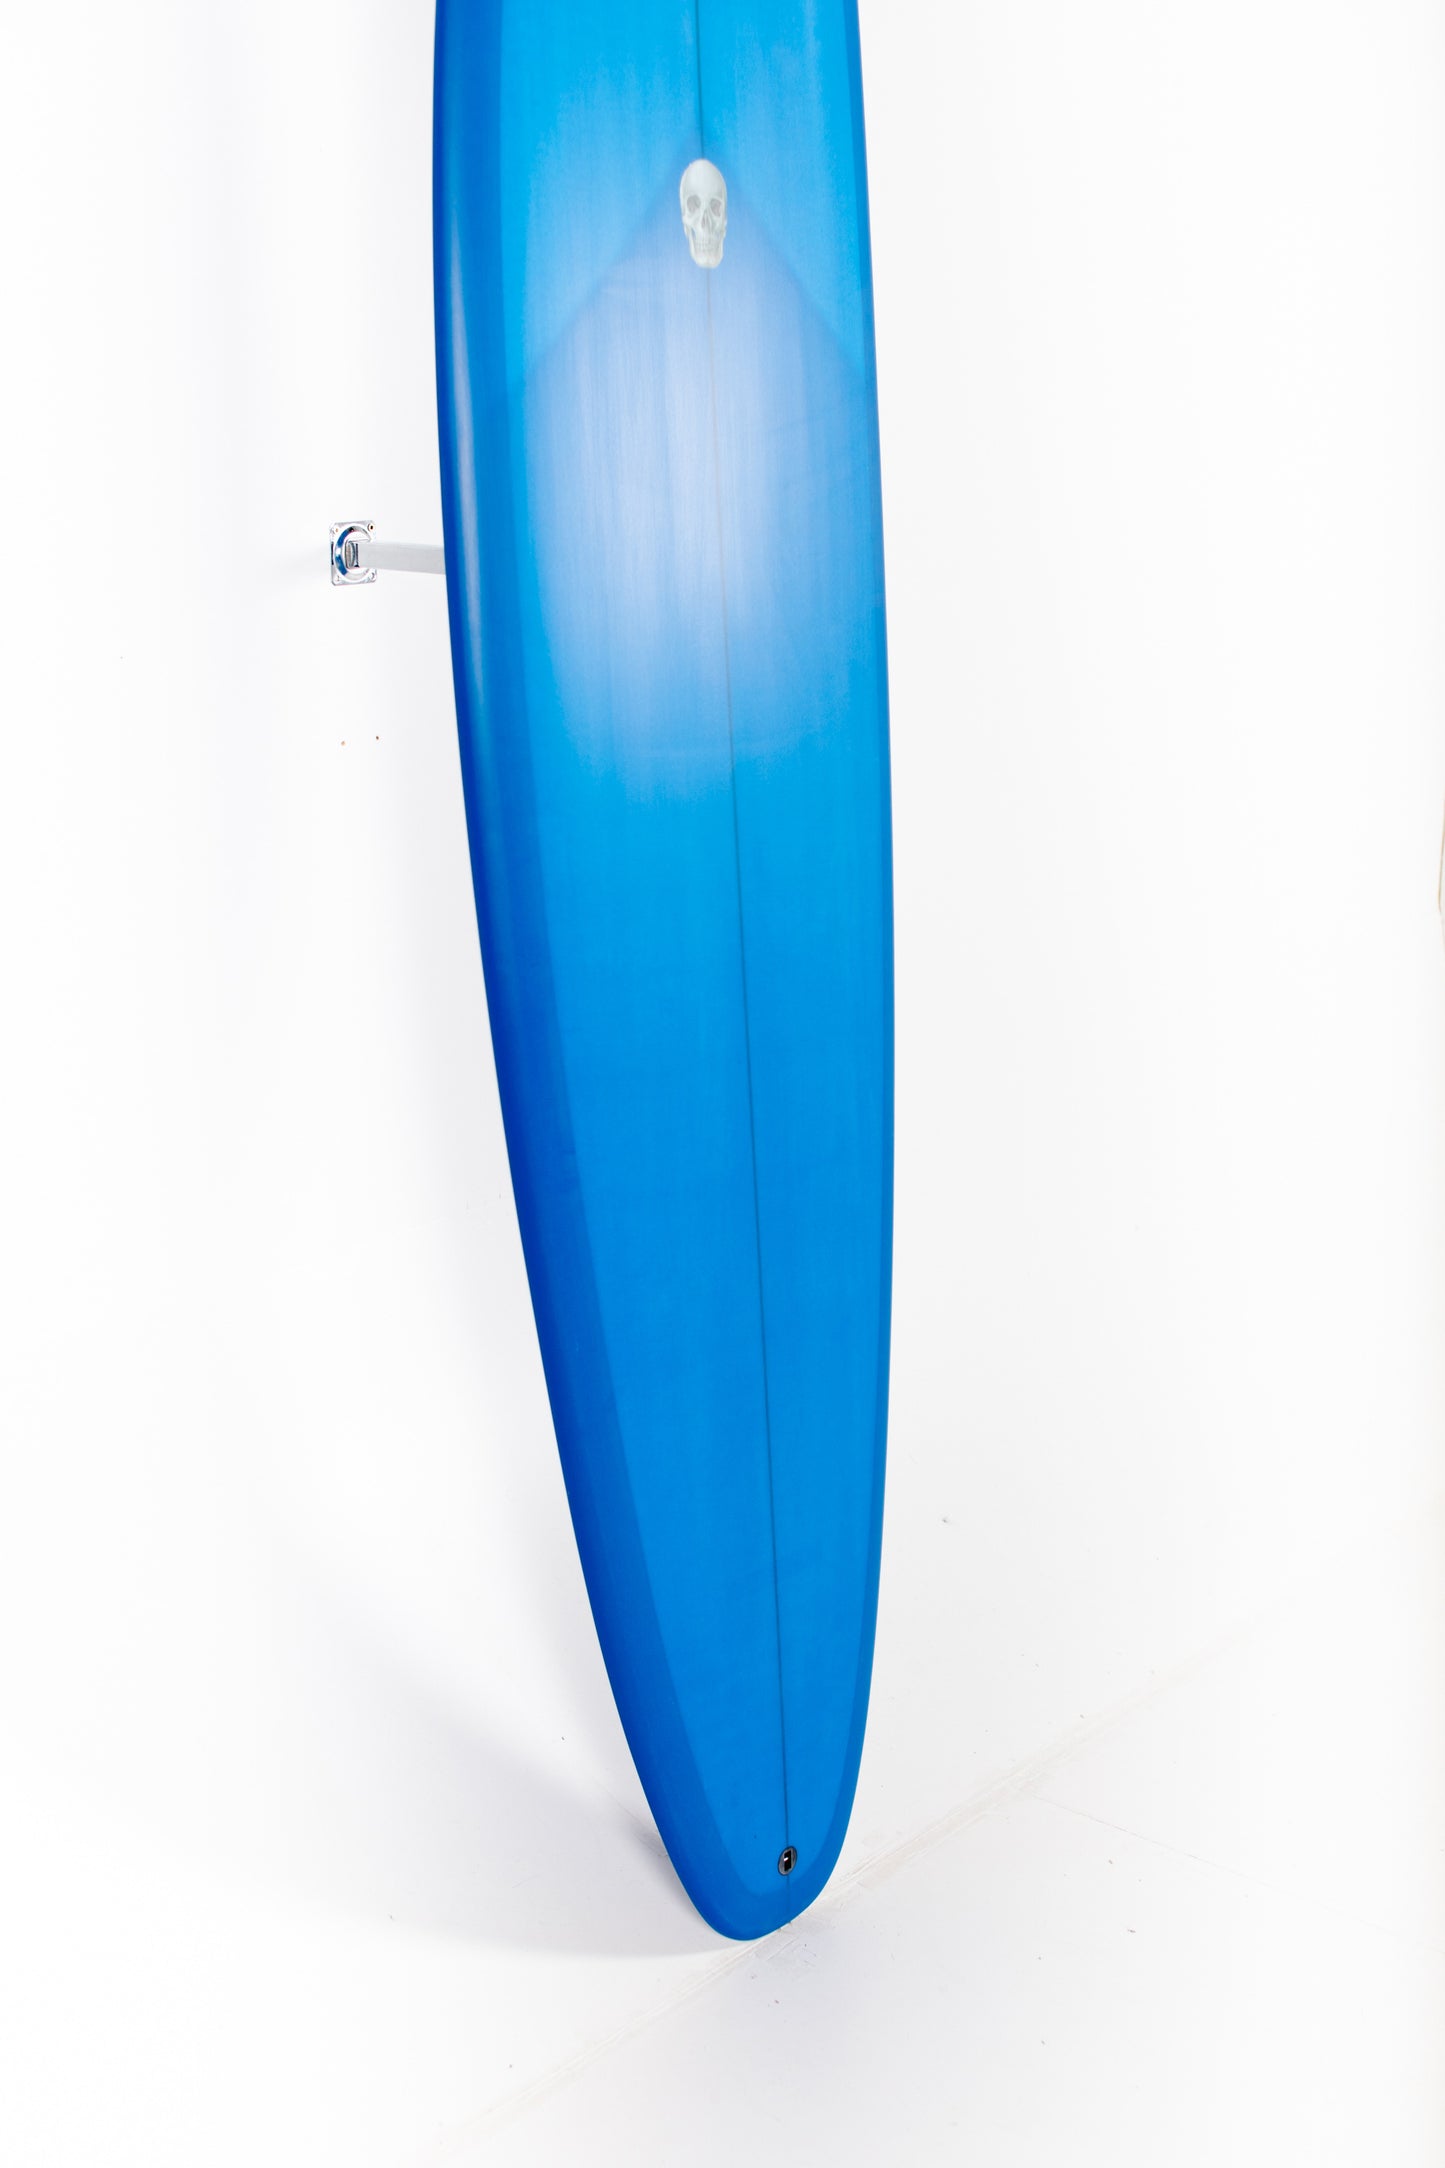 
                  
                    Pukas Surf shop - Christenson Surfboards - TWIN TRACKER - 7'6" x 21 1/4  x 2 7/8 - CX02891
                  
                